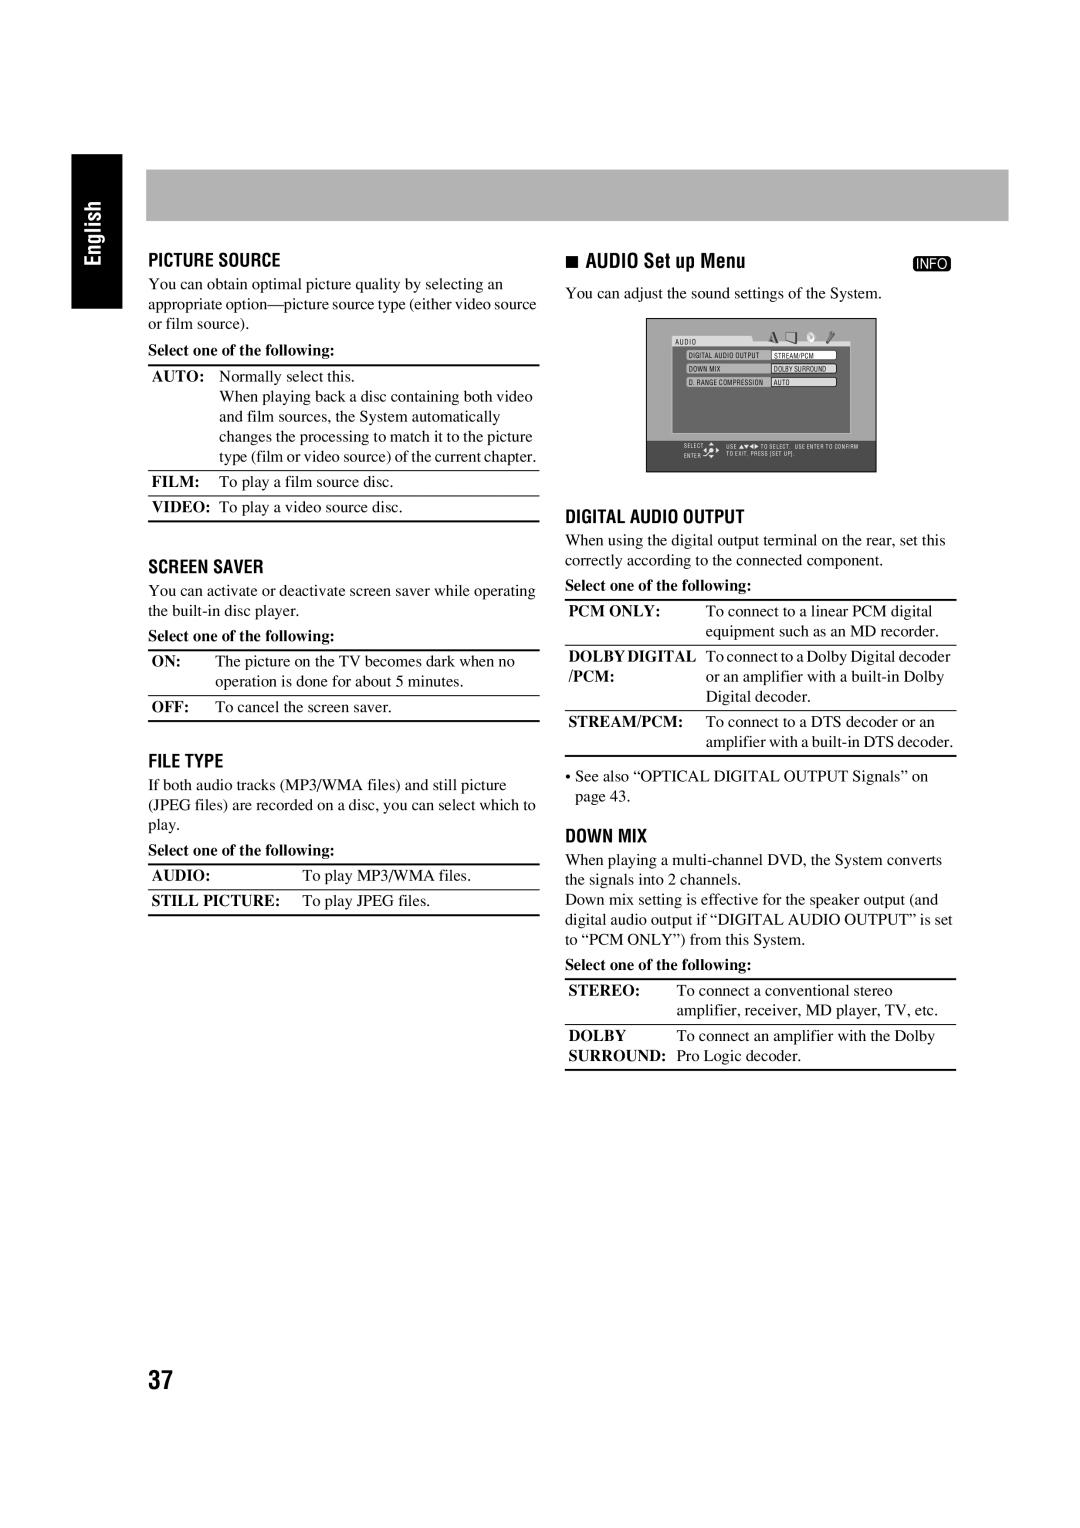 JVC HX-D77 manual English, AUDIO Set up Menu, Picture Source, Screen Saver, File Type, Digital Audio Output, Down Mix 